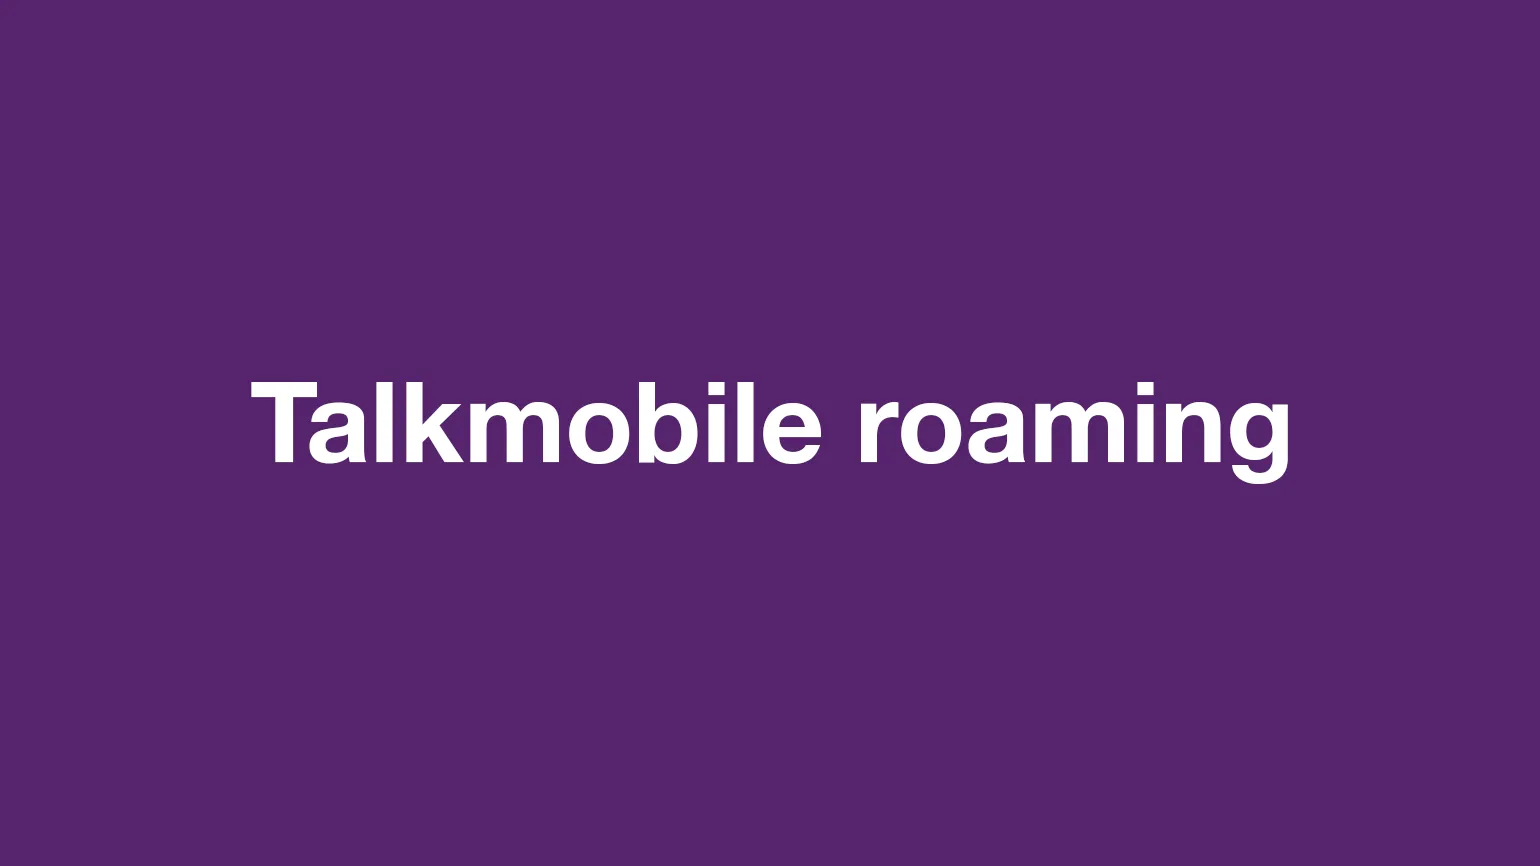 Talkmobile roaming - International roaming with Talkmobile explained